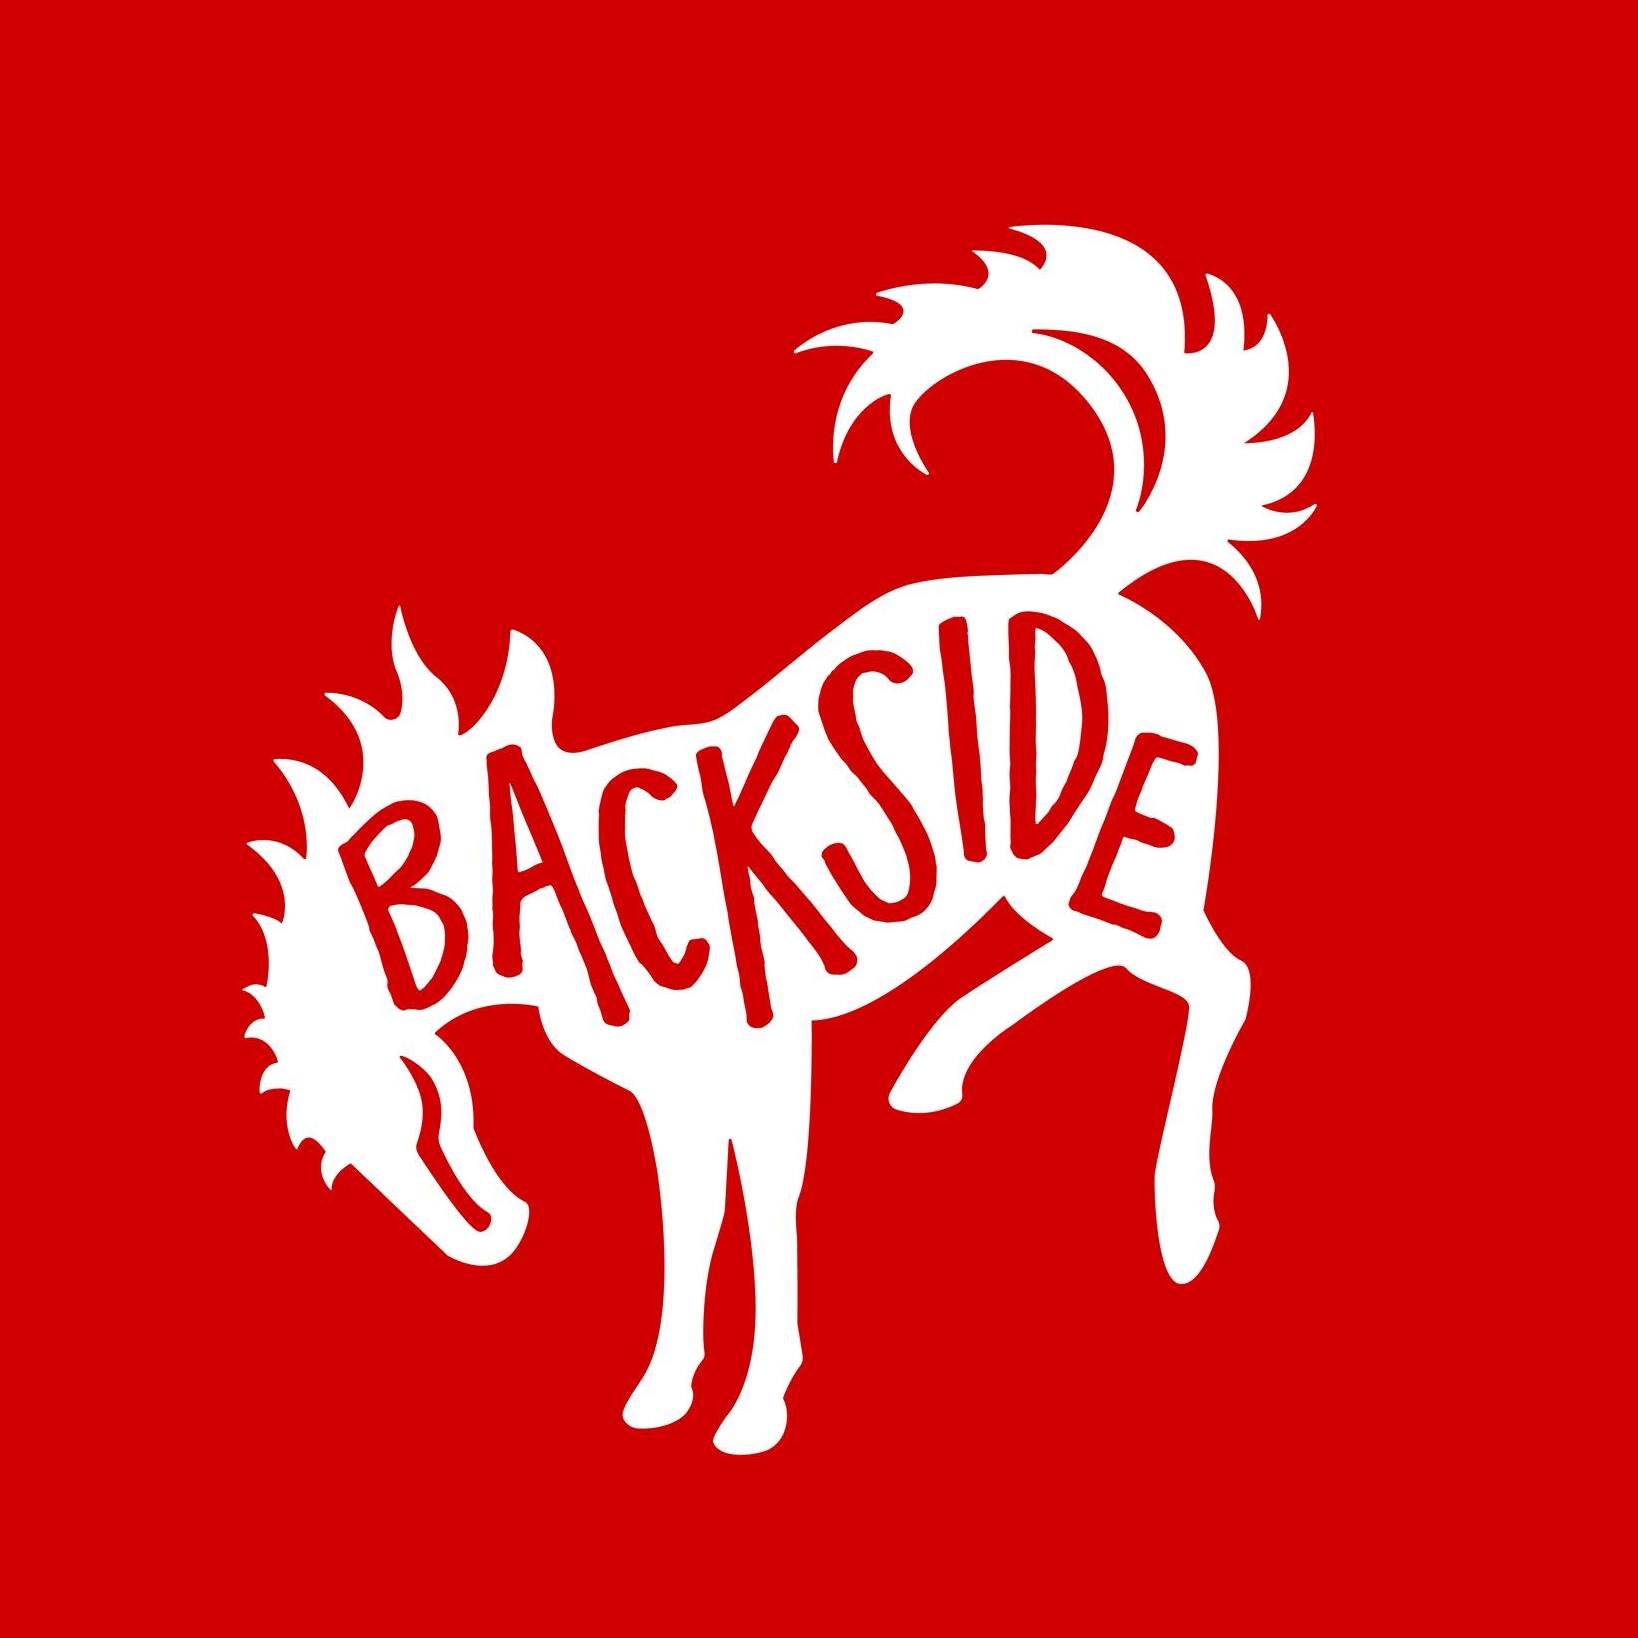 Backside Trail Marathon logo on RaceRaves